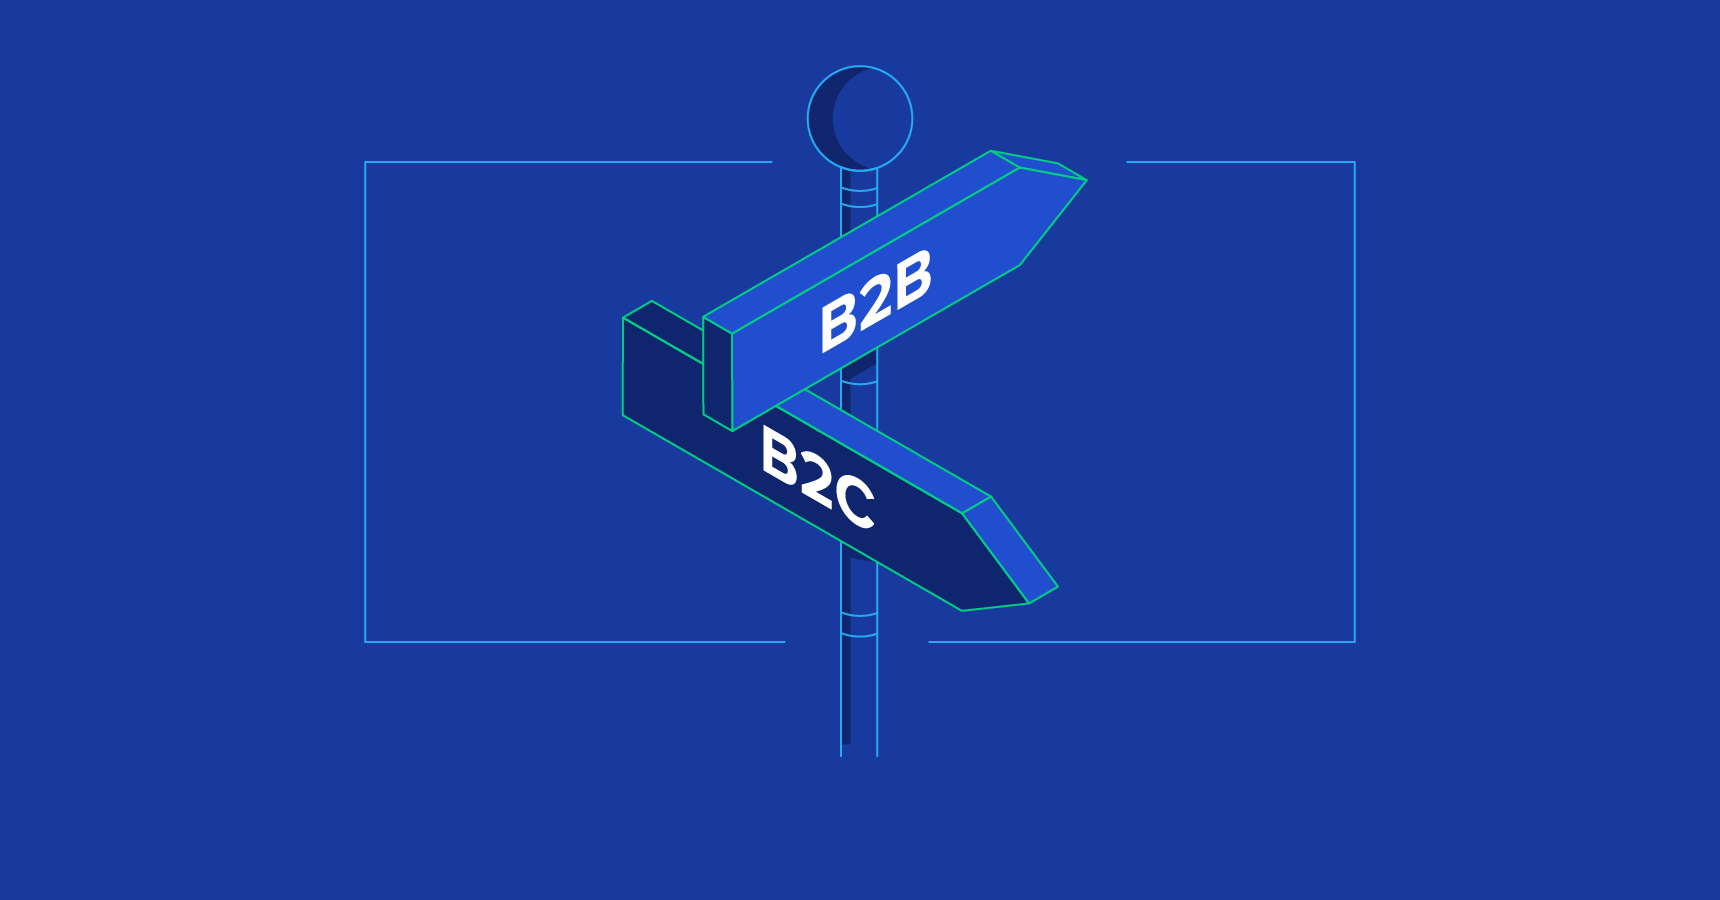 b2b or b2c pricing